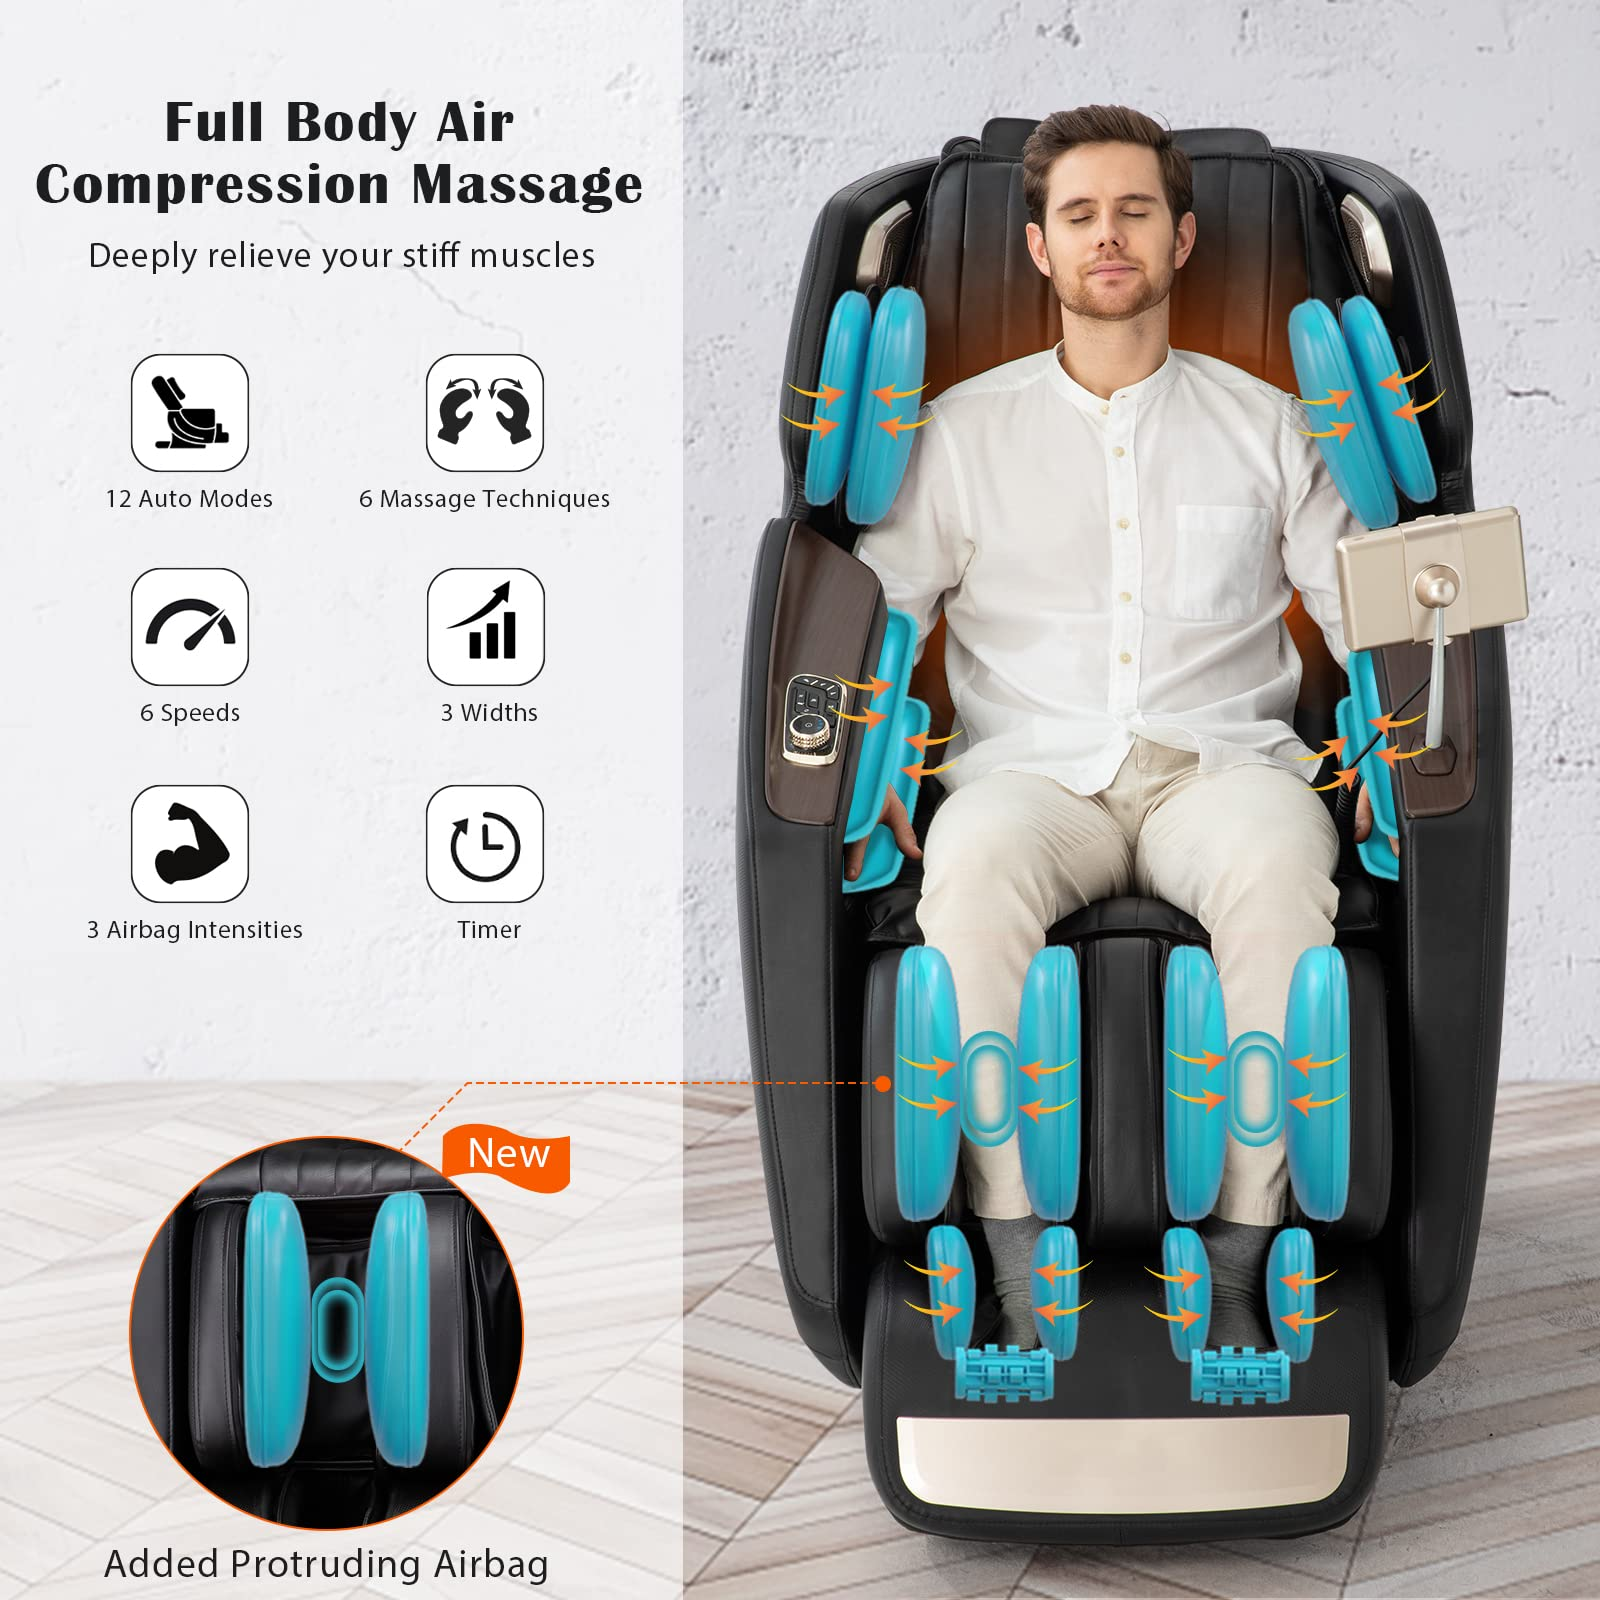 Giantex 3D Full Body Massage Chair, Zero-Gravity Massage Recliner Chair w/ 7'' Touch Screen & SL Track